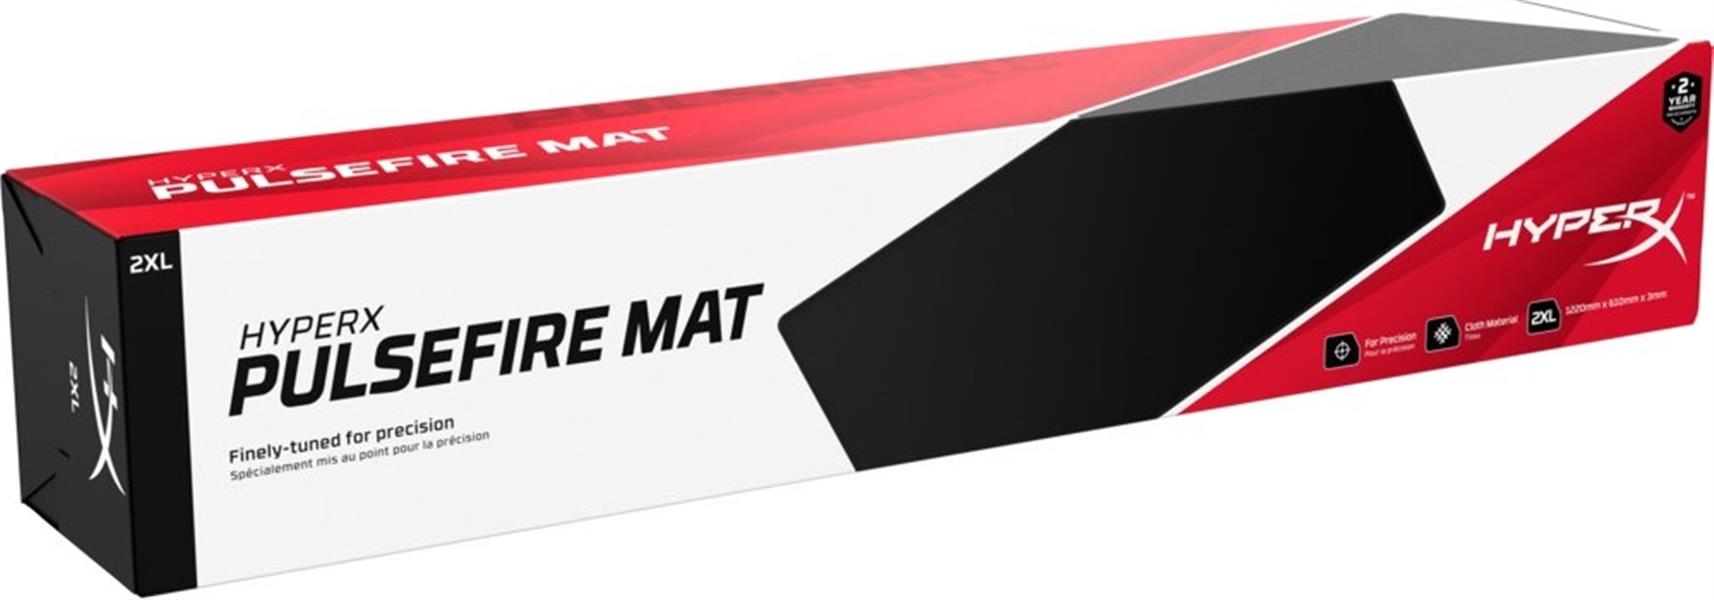 HyperX Pulsefire Mat - Gaming Mouse Pad - doek (2XL)